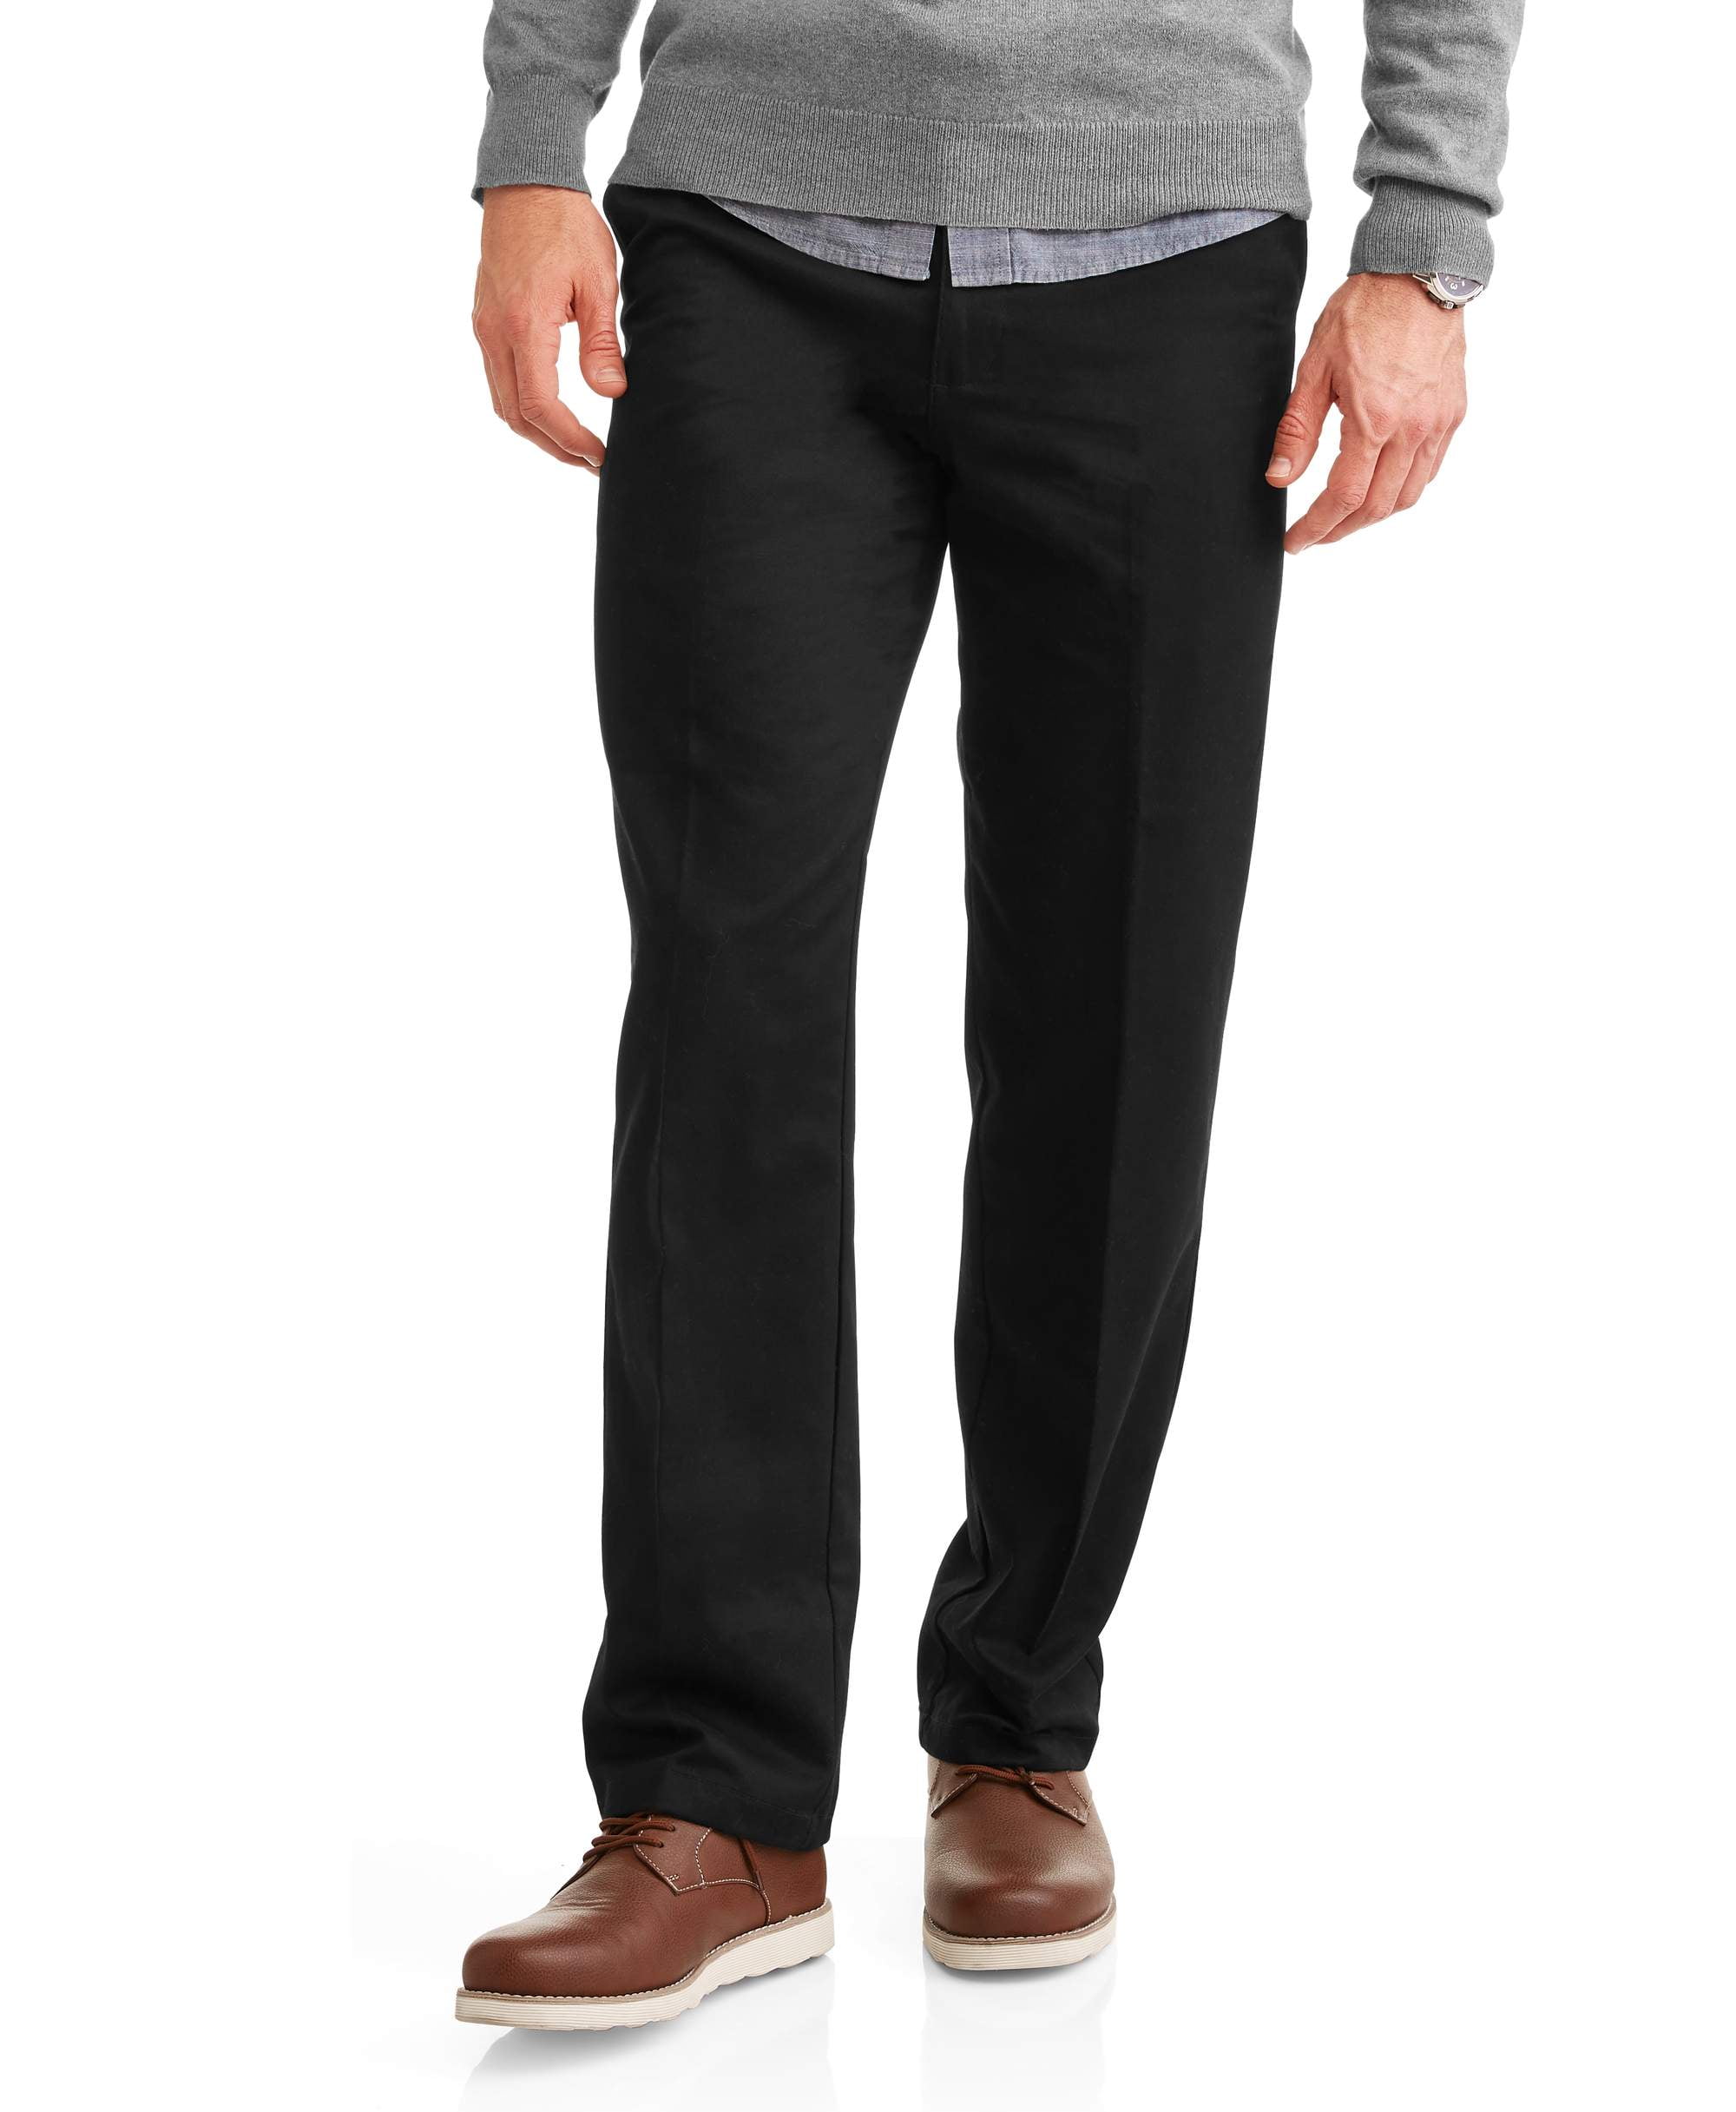 Khaki Thomson Twill Pants | All American Clothing Co